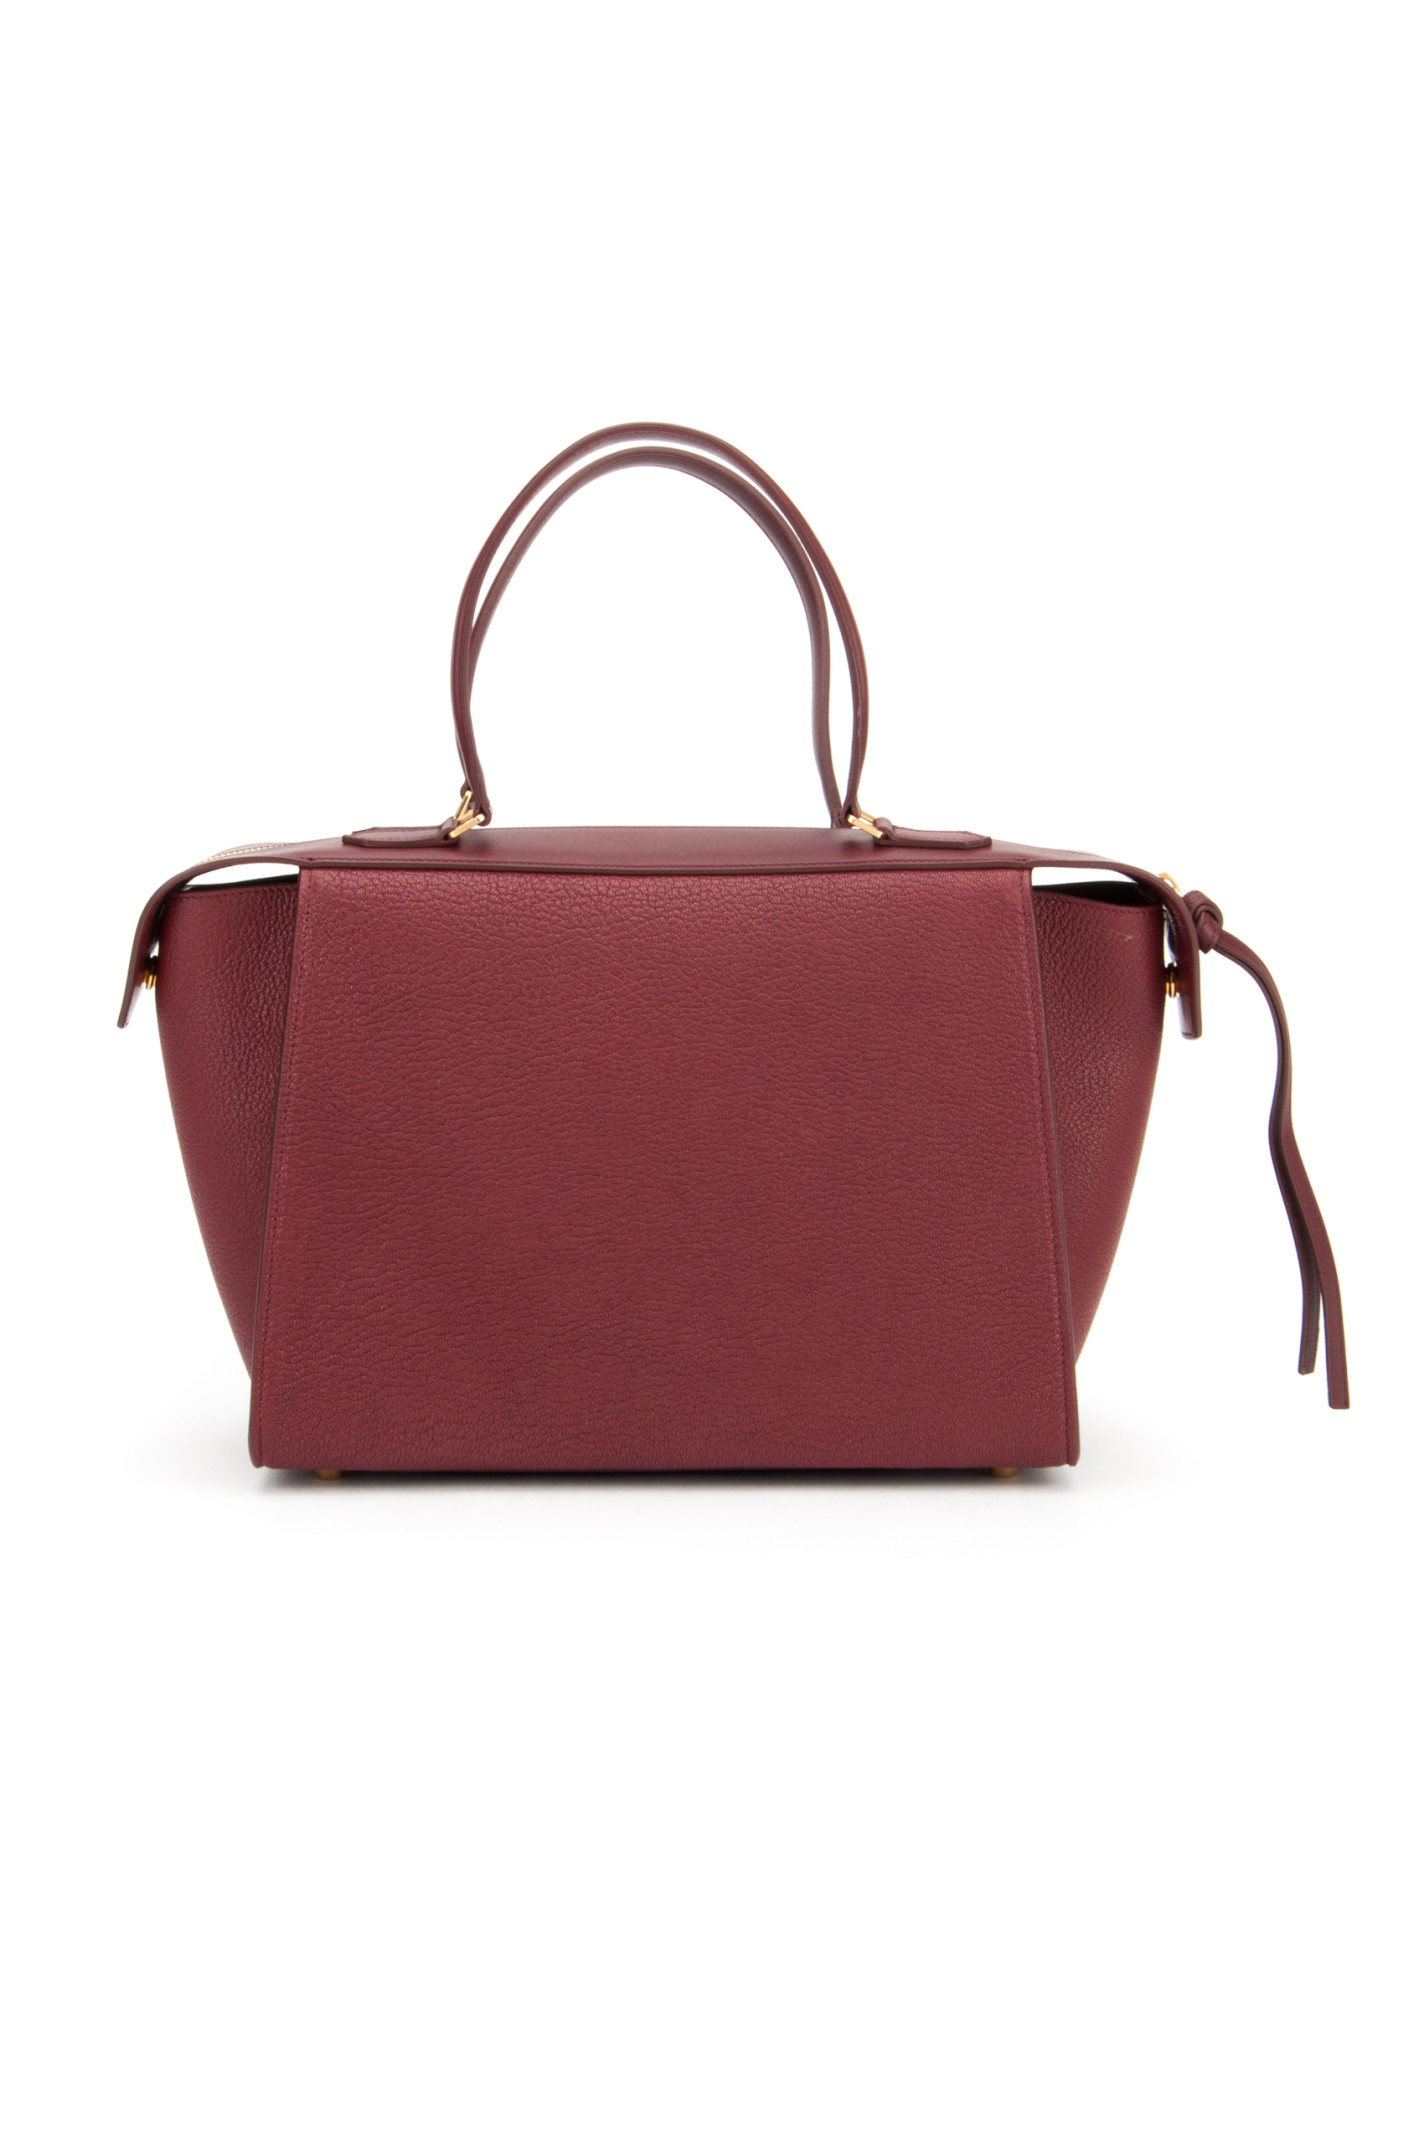 borsa celine luggage phantom burgundy, celine handbags cost